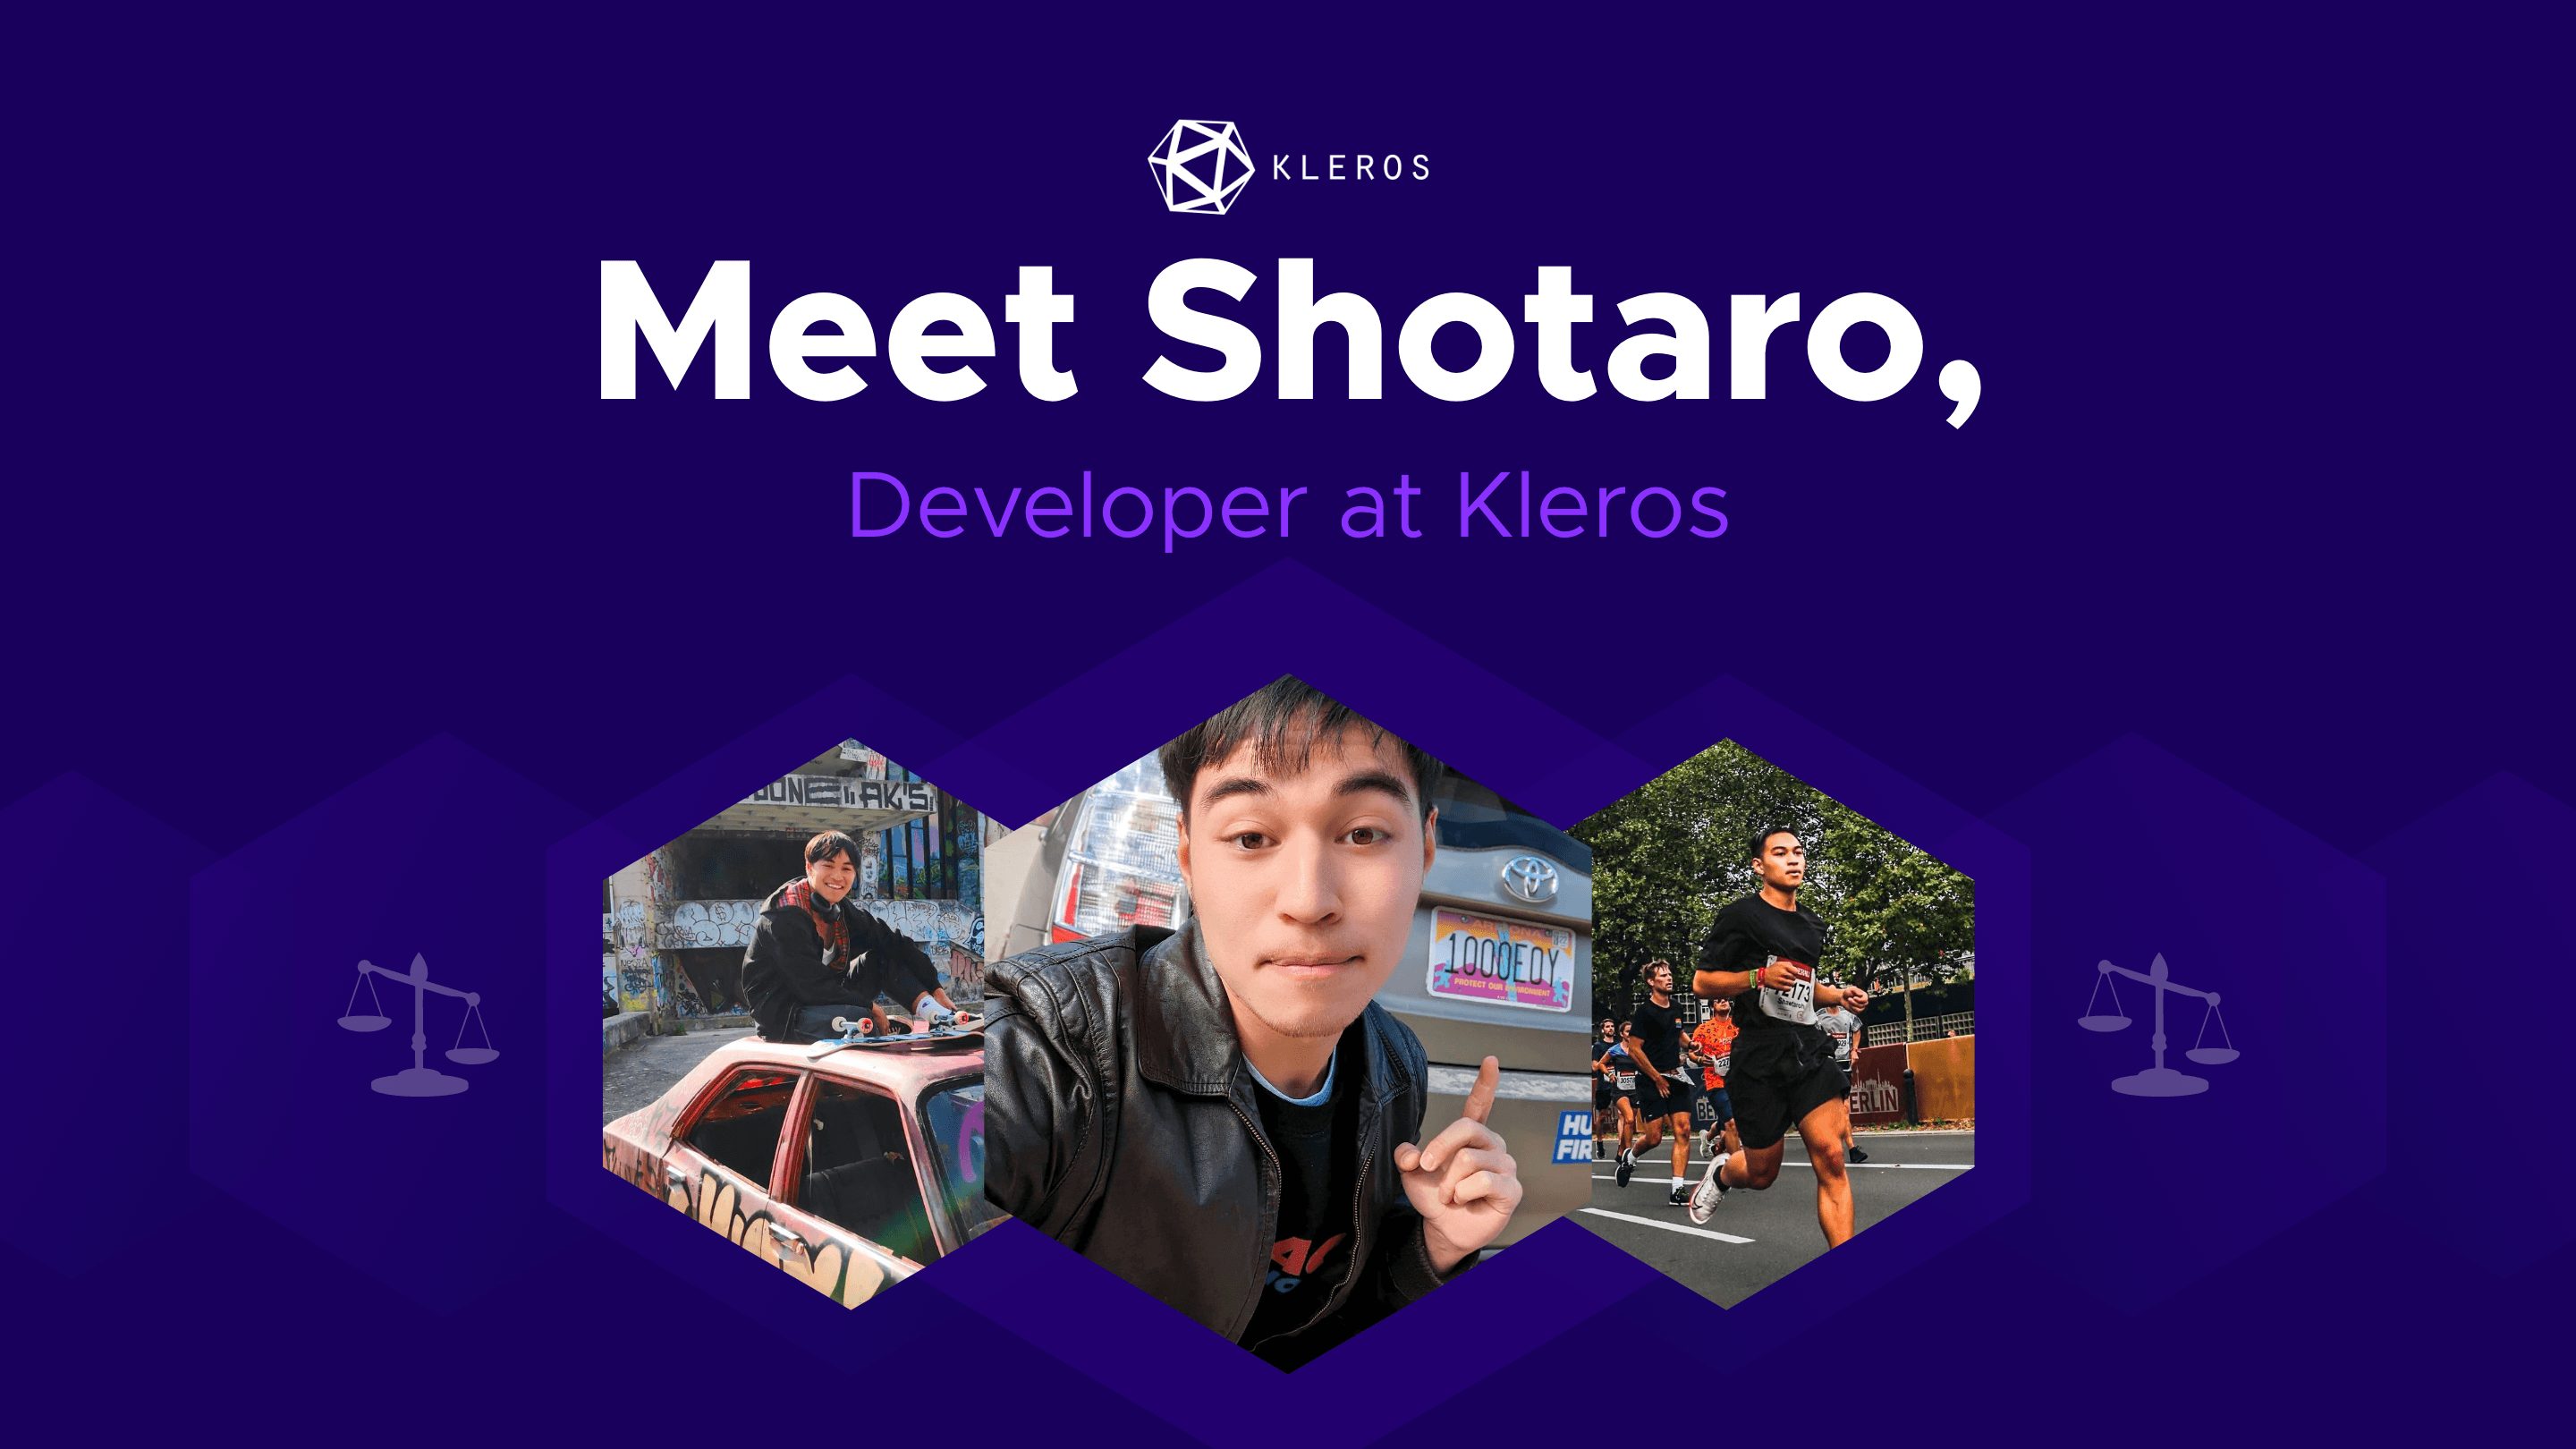 Meet Shotaro, Developer at Kleros